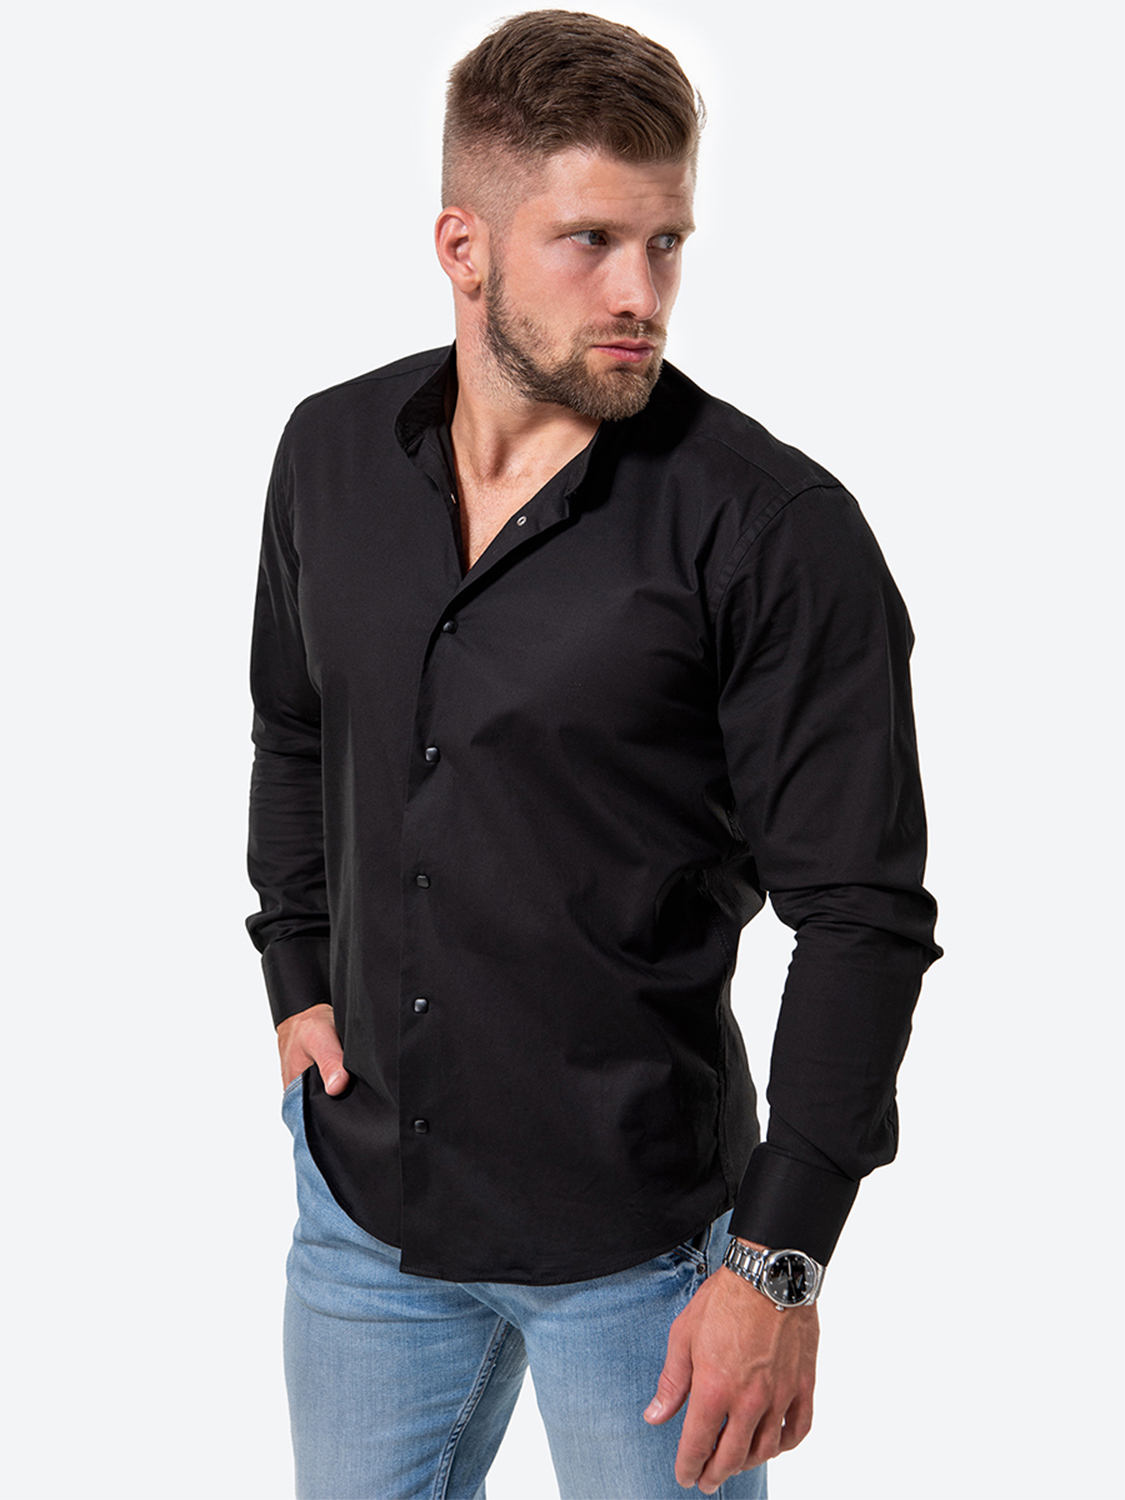 Рубашка мужская HappyFox HFCL1002 черная 48 RU